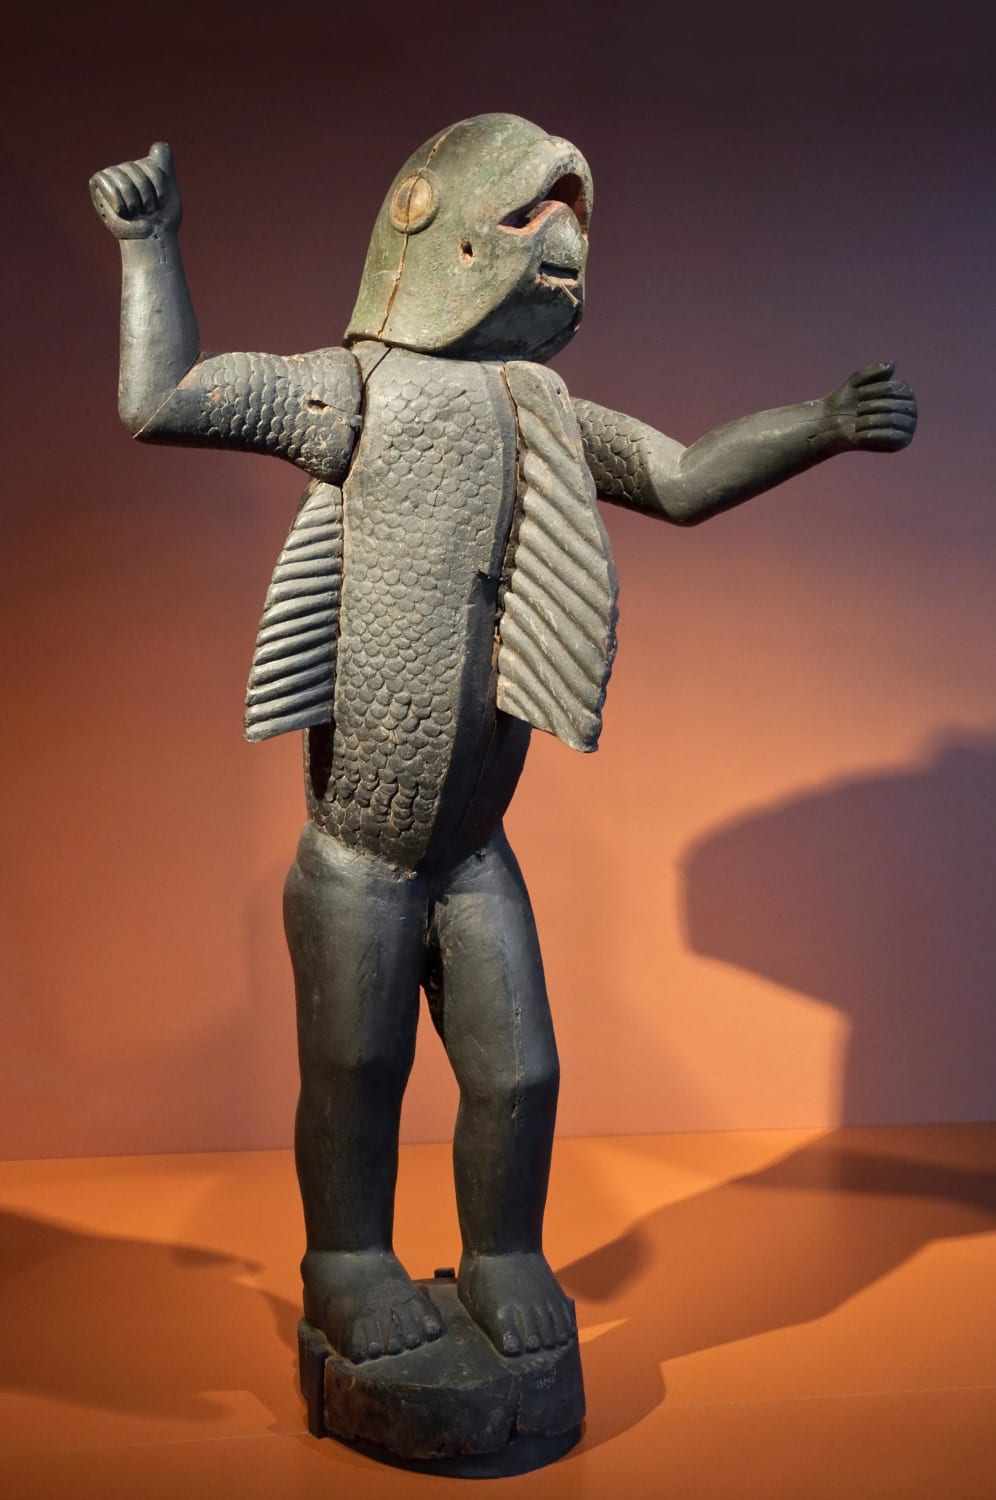 "Man-Shark" symbolizing King Behanzin of Dahomey (now Benin), 1889-1893